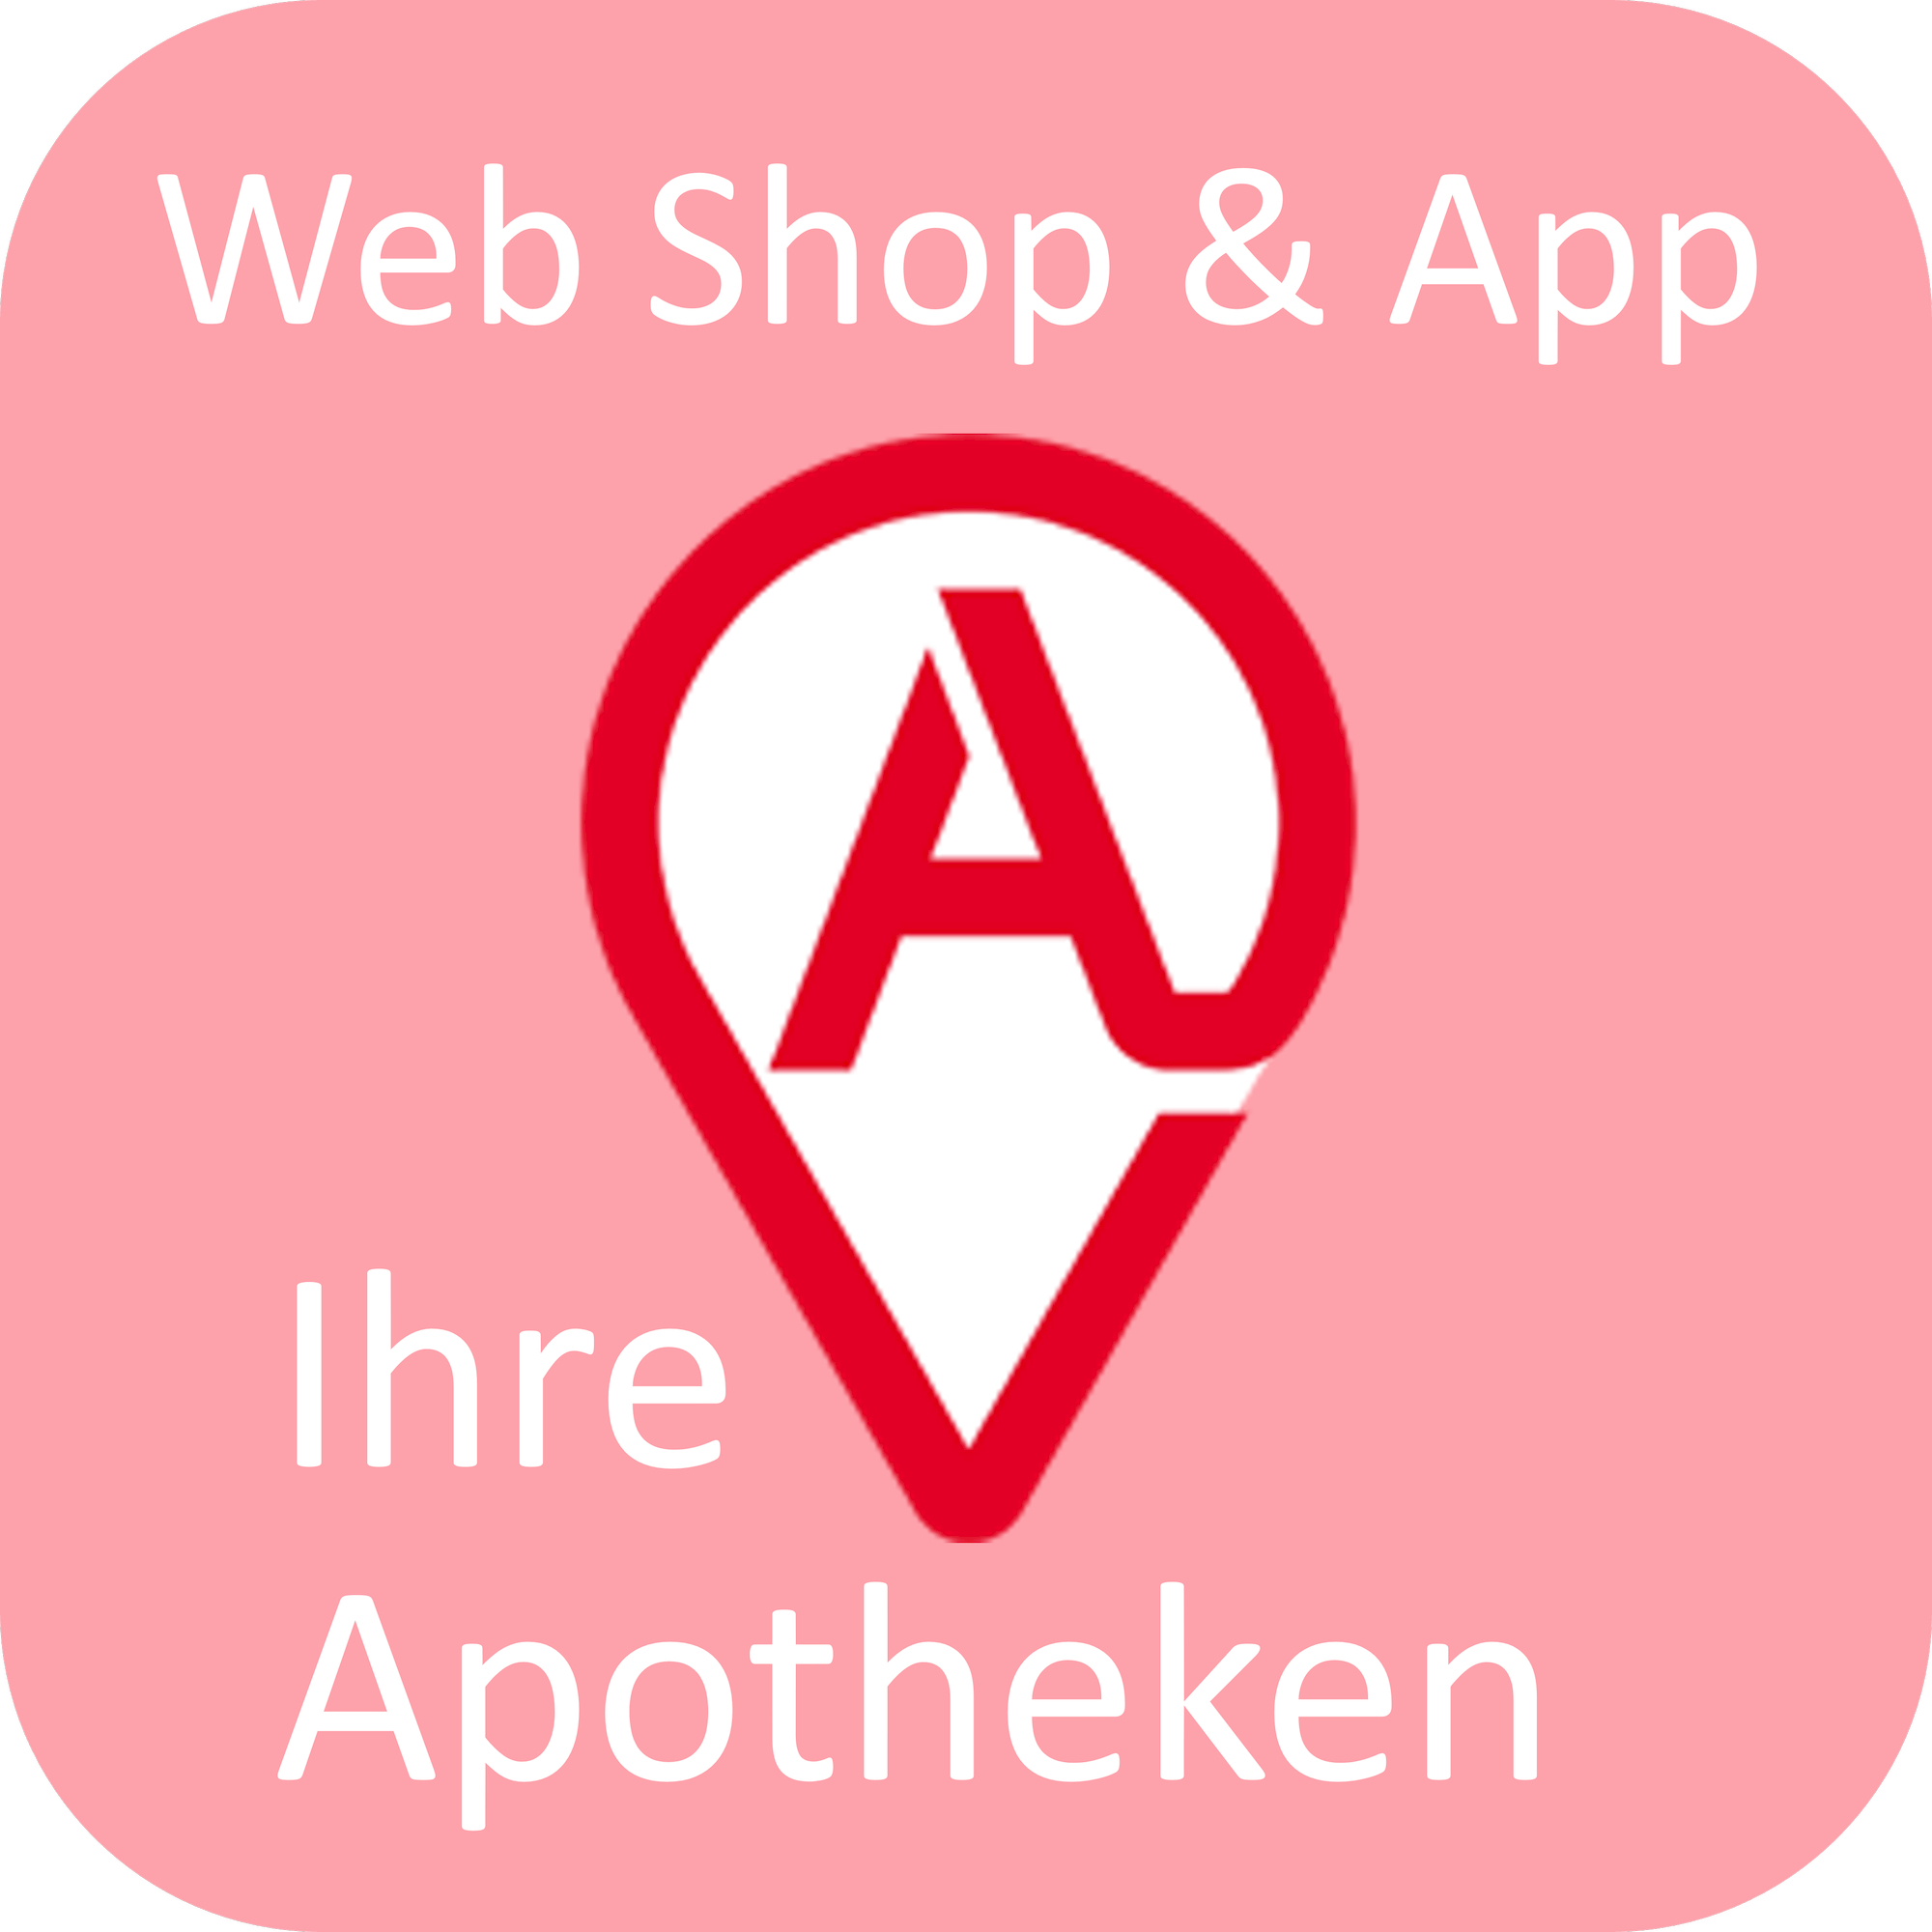 Web Shop & App: "Ihre Apotheken"